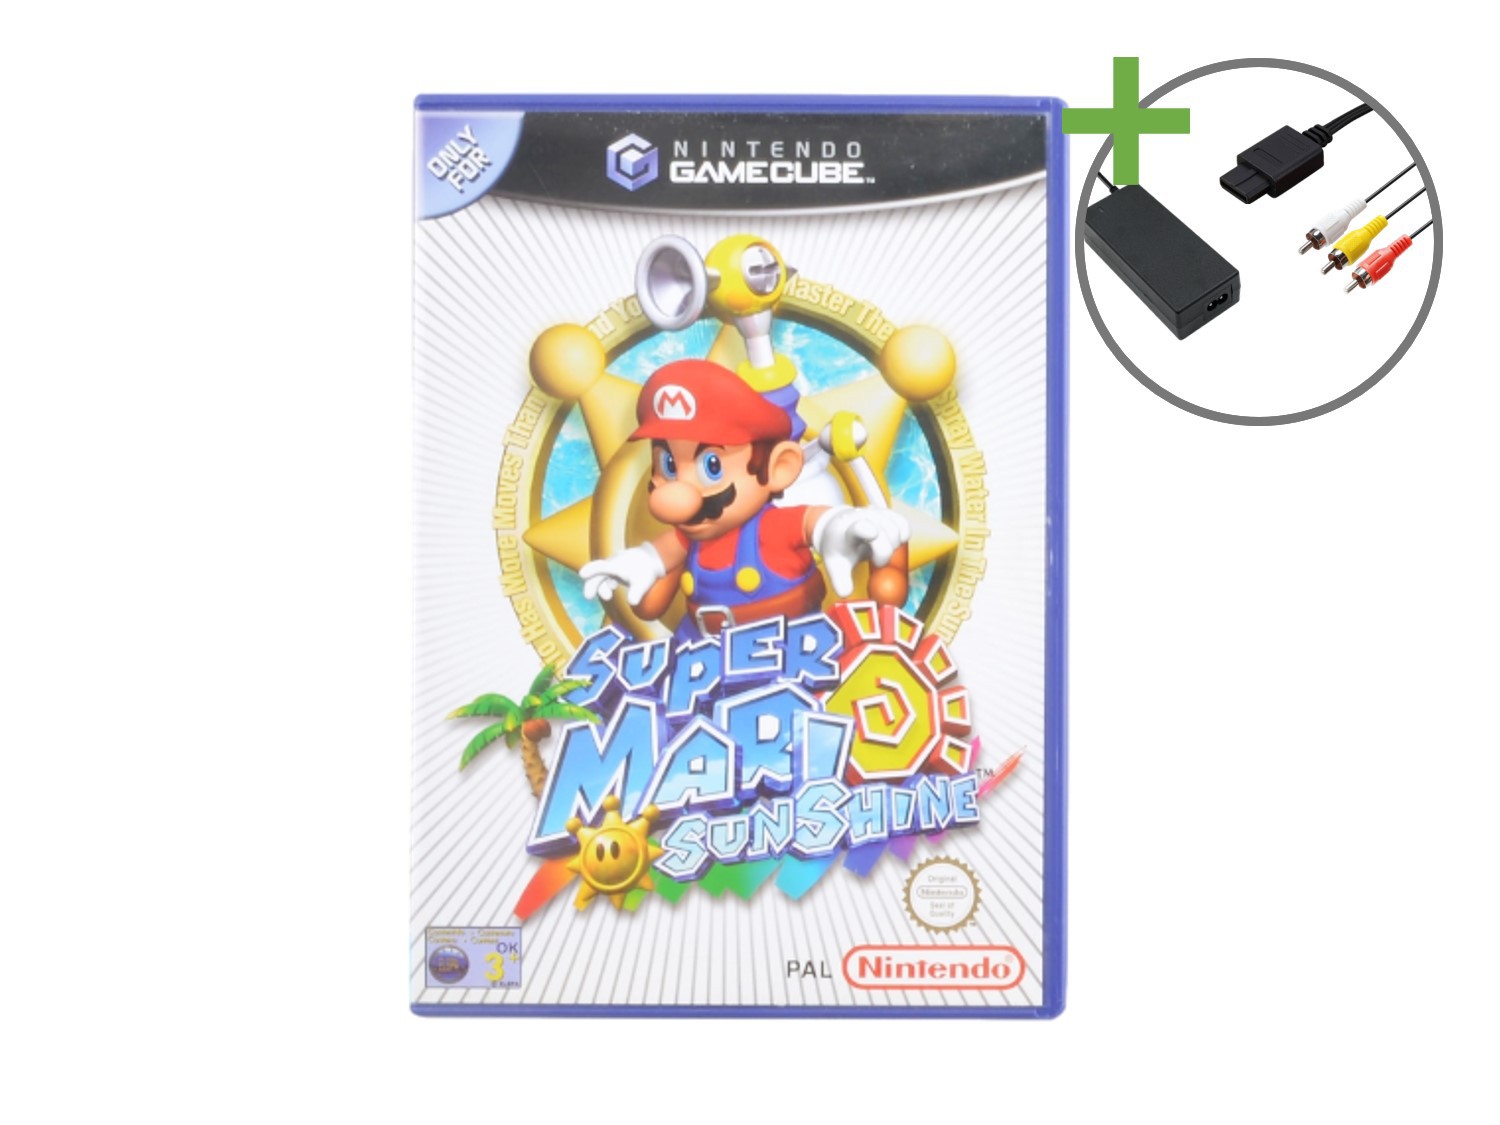 Nintendo Gamecube Starter Pack - Super Mario Sunshine Edition - Gamecube Hardware - 4